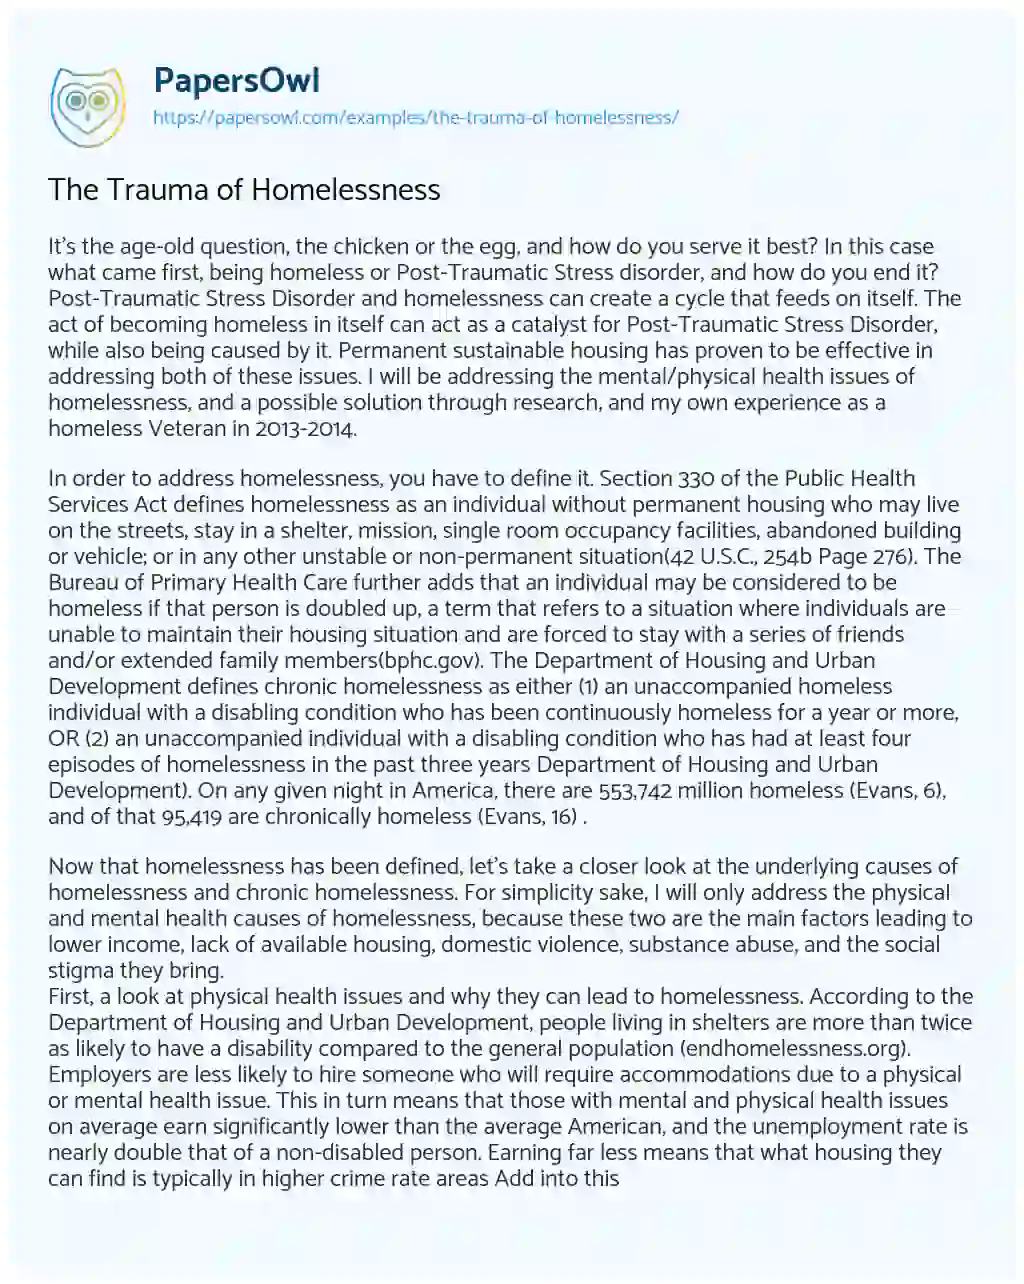 Essay on The Trauma of Homelessness